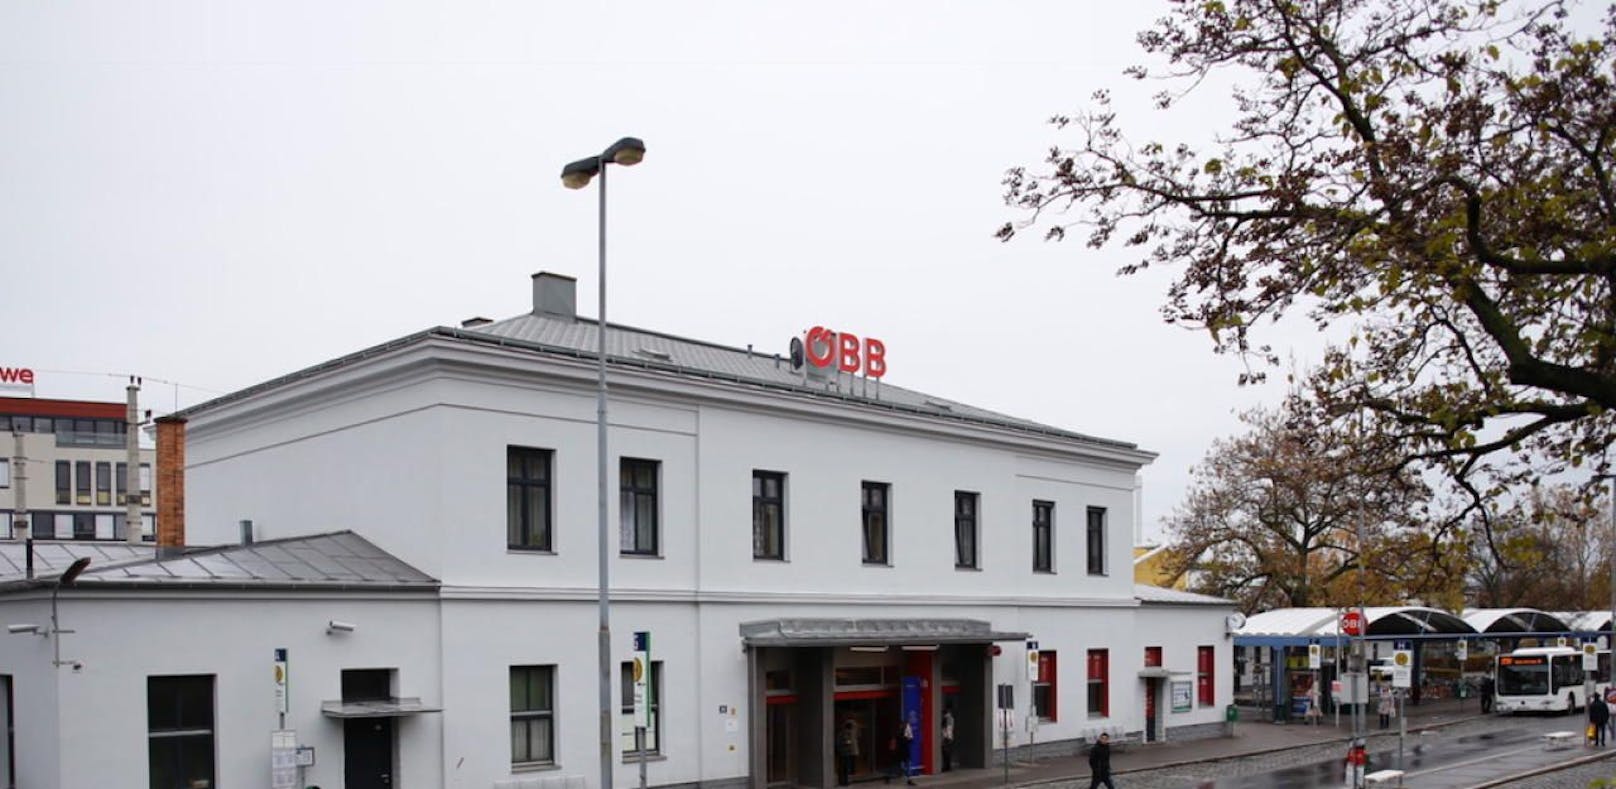 Vorfall am Bahnhof Mödling